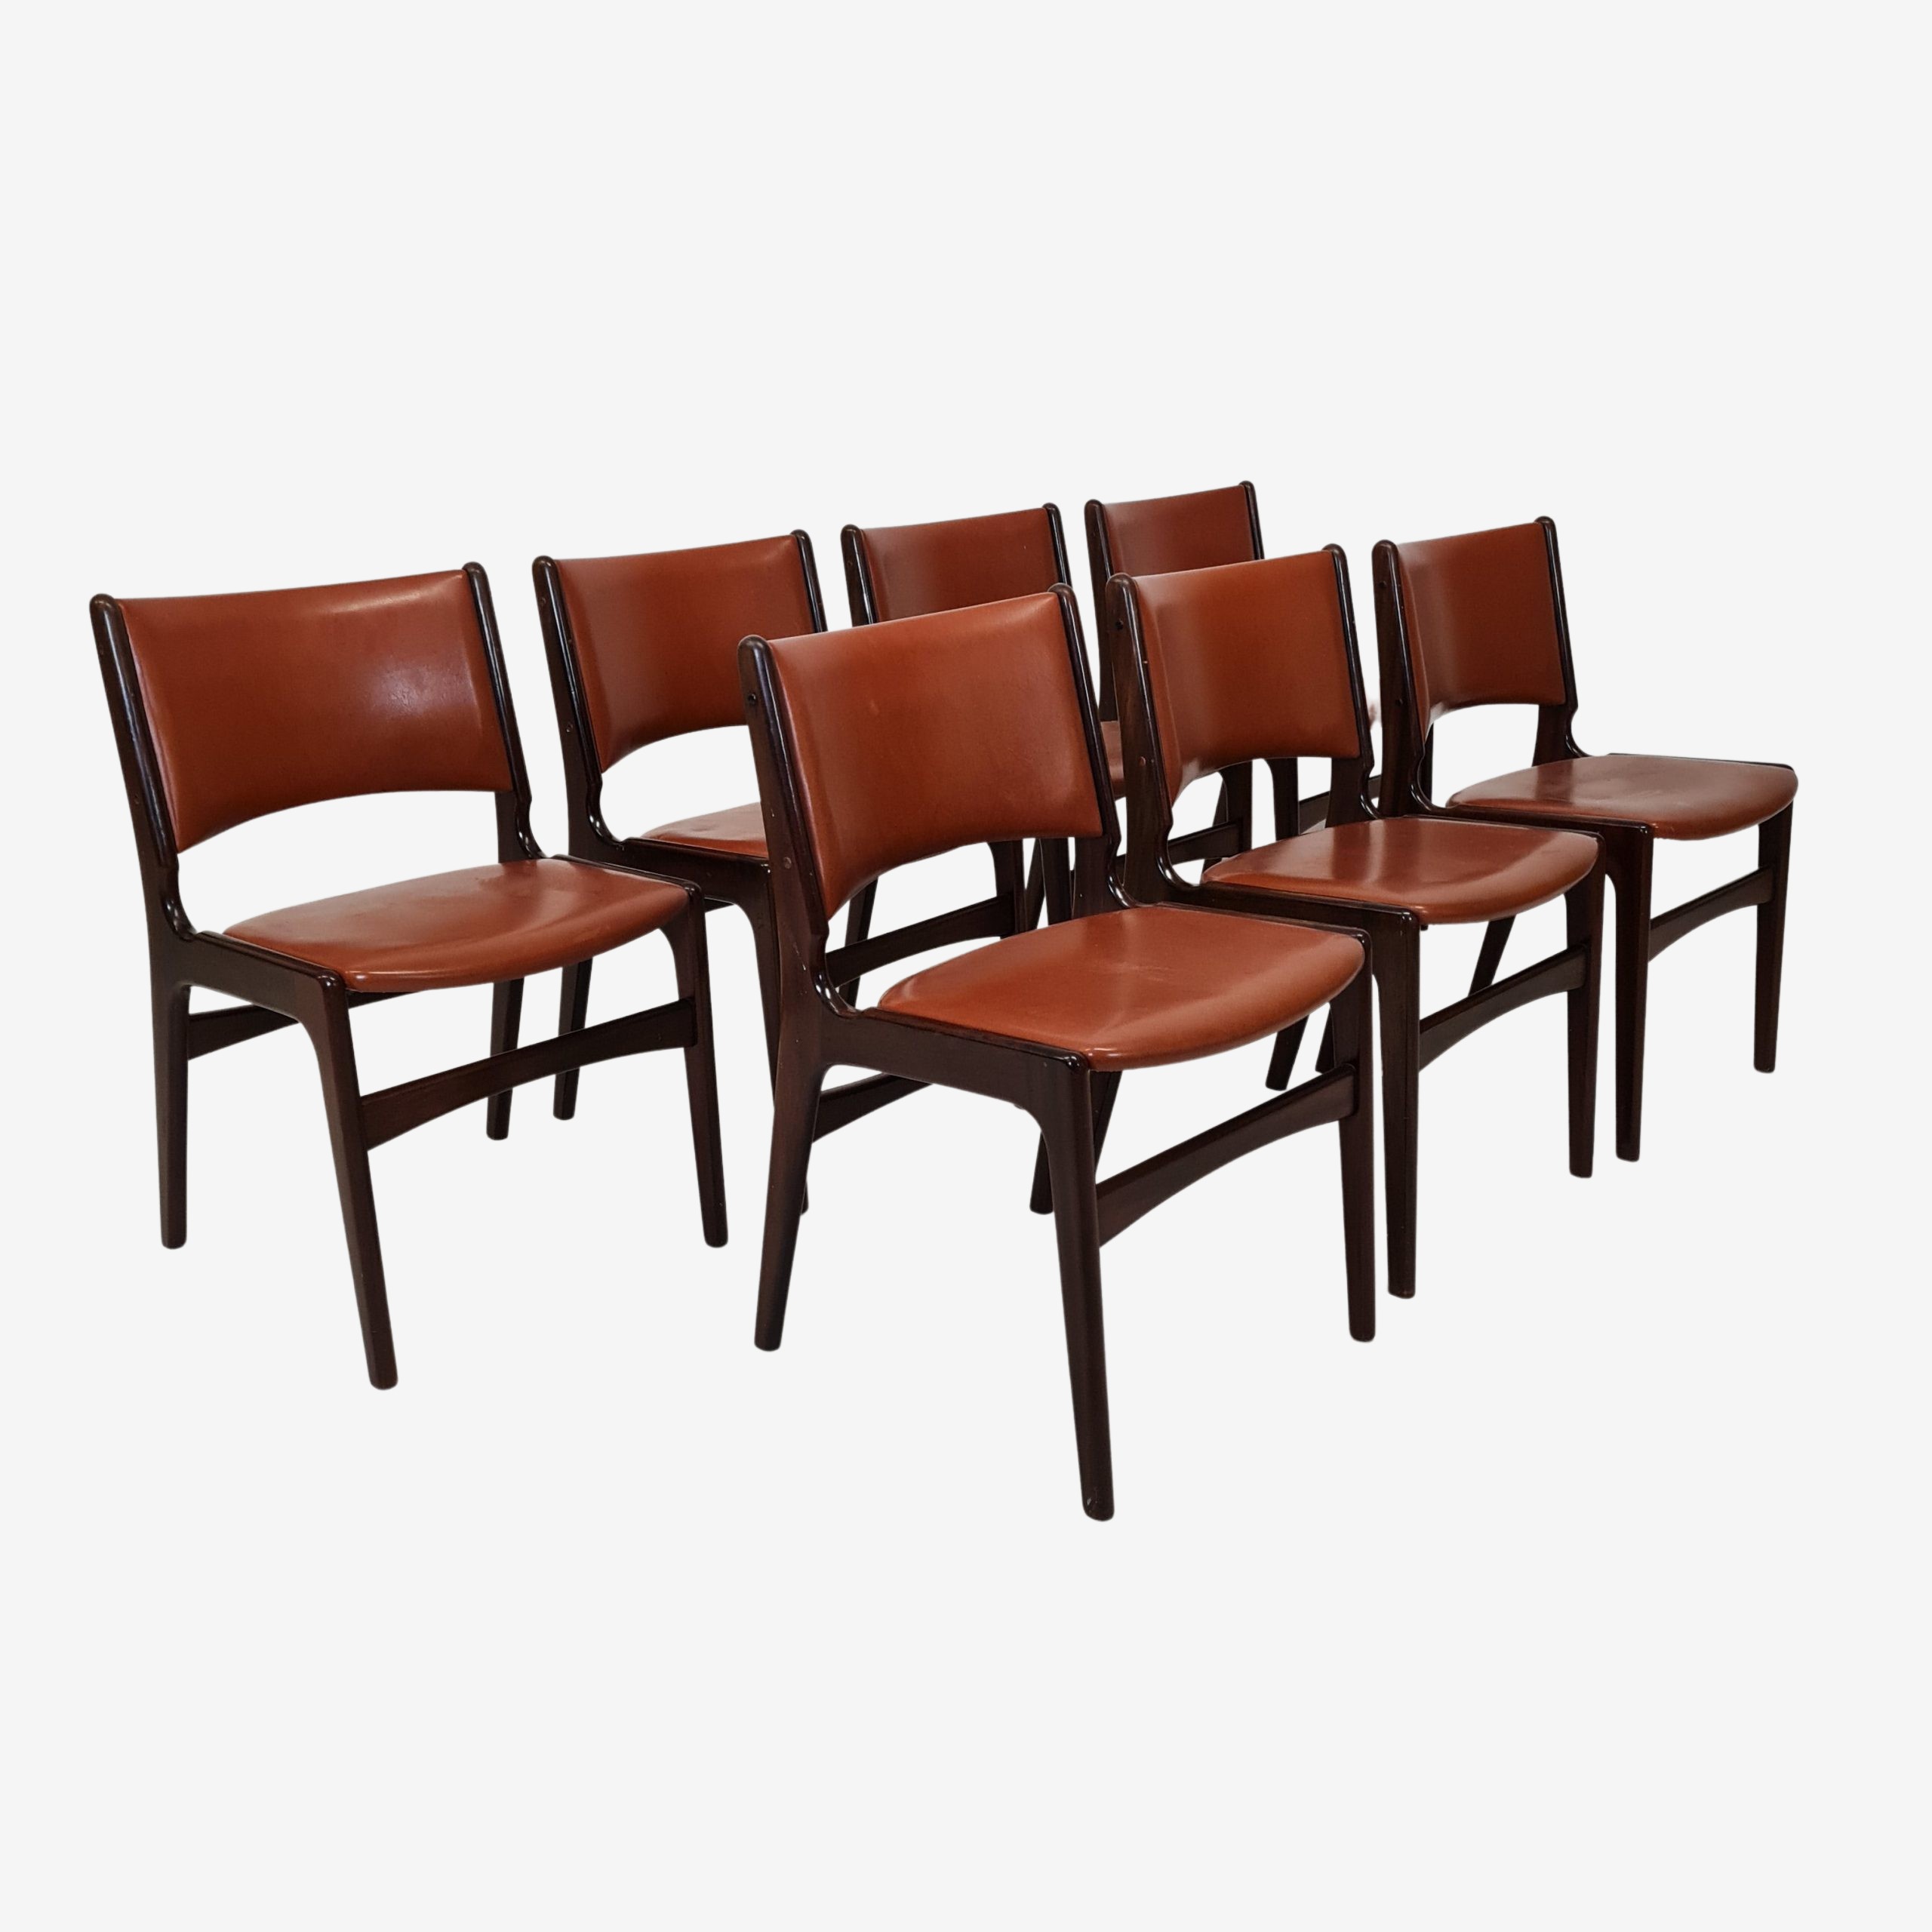 Dining table chair model 89 | Teak | Erik Buch | Anderstrup Møbelfabrik (Set of 5)